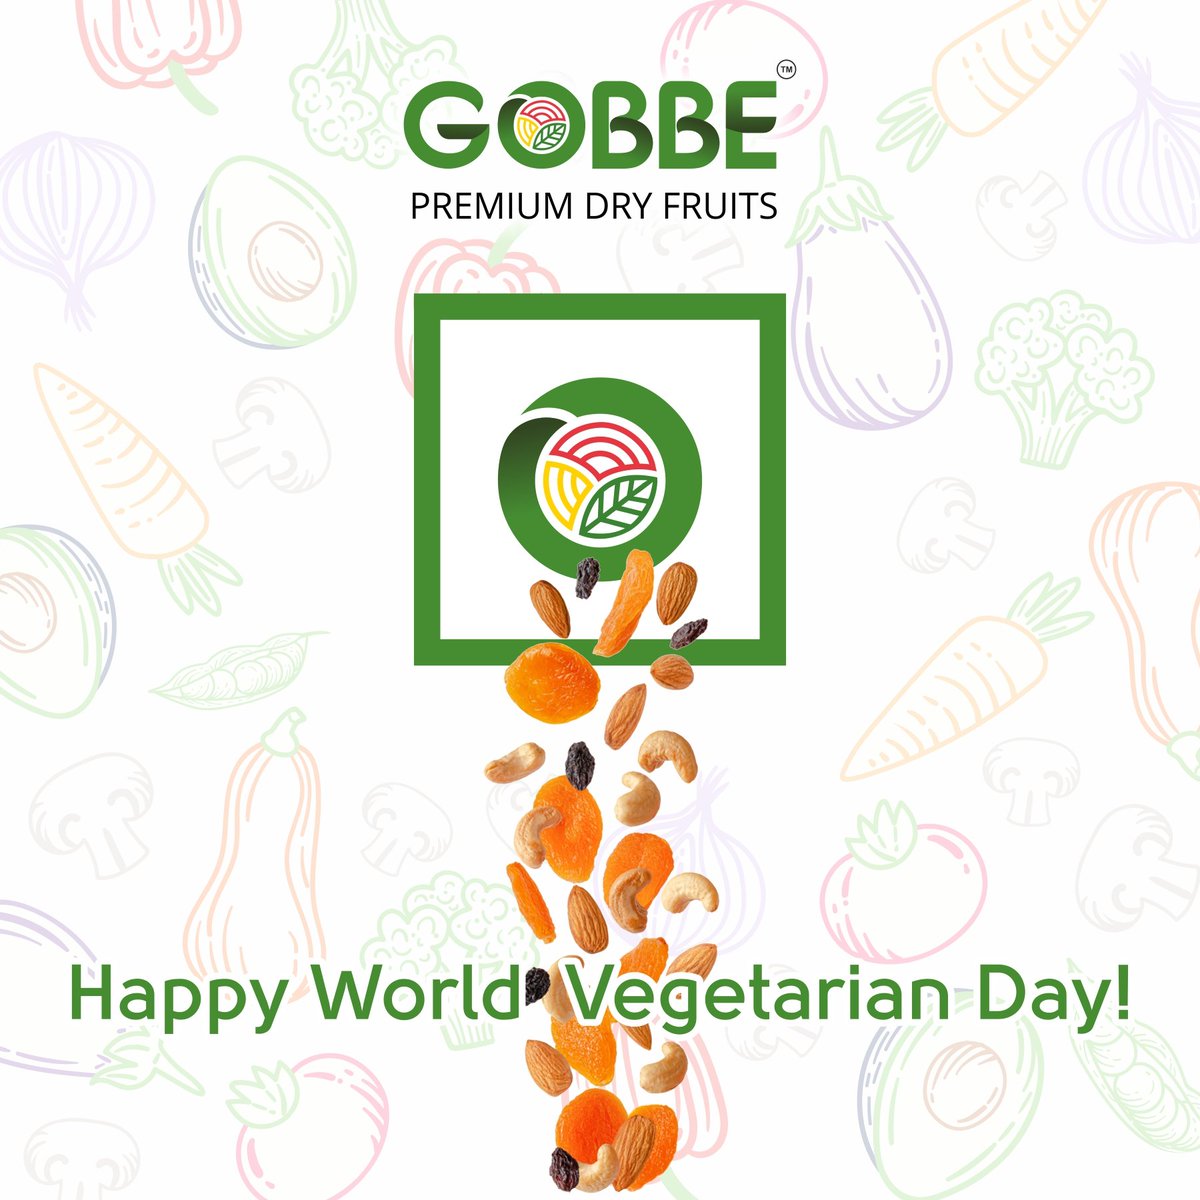 'Plant-powered, savor the flavor of veggies'

Happy World Vegetarian Day!

#WorldVegetarianDay
#WorldVegetarianDay2023
#Vegan #Veggie #VegetarianLife #Gobbe #GobbePremiumDryFruits #GobbeDryFruits #GobbeSnacking #PlantBasedLiving #GoVeggie #VegetarianForHealth #VegetarianFood